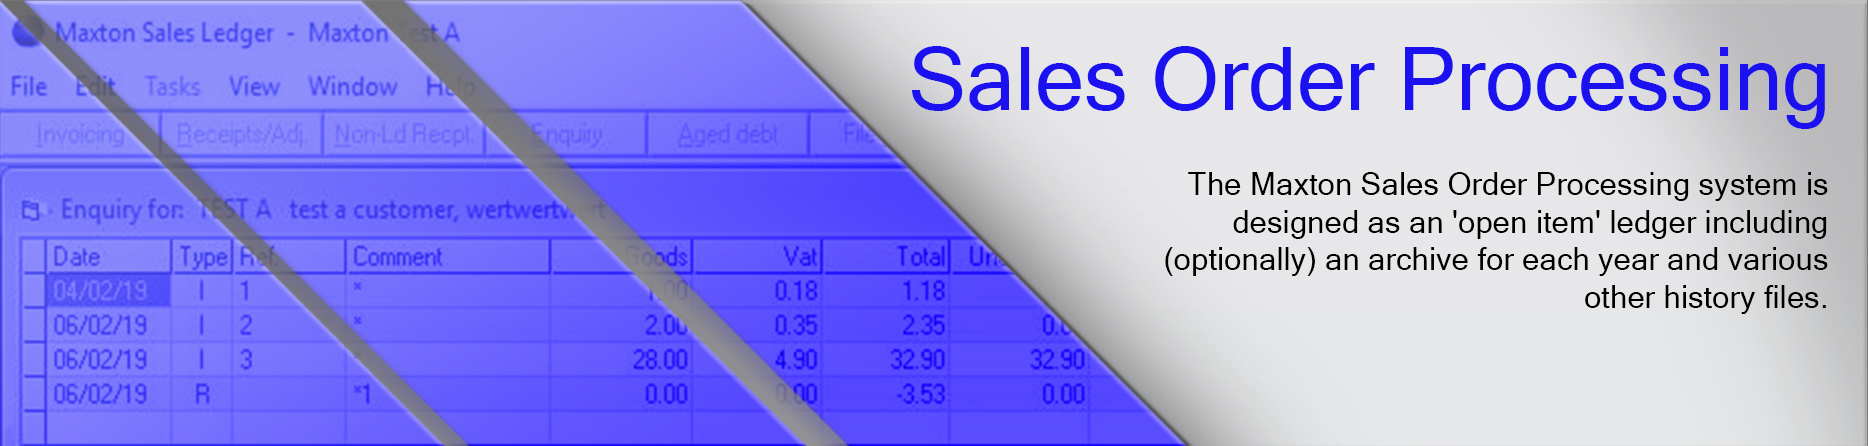 Sales Order_Processing